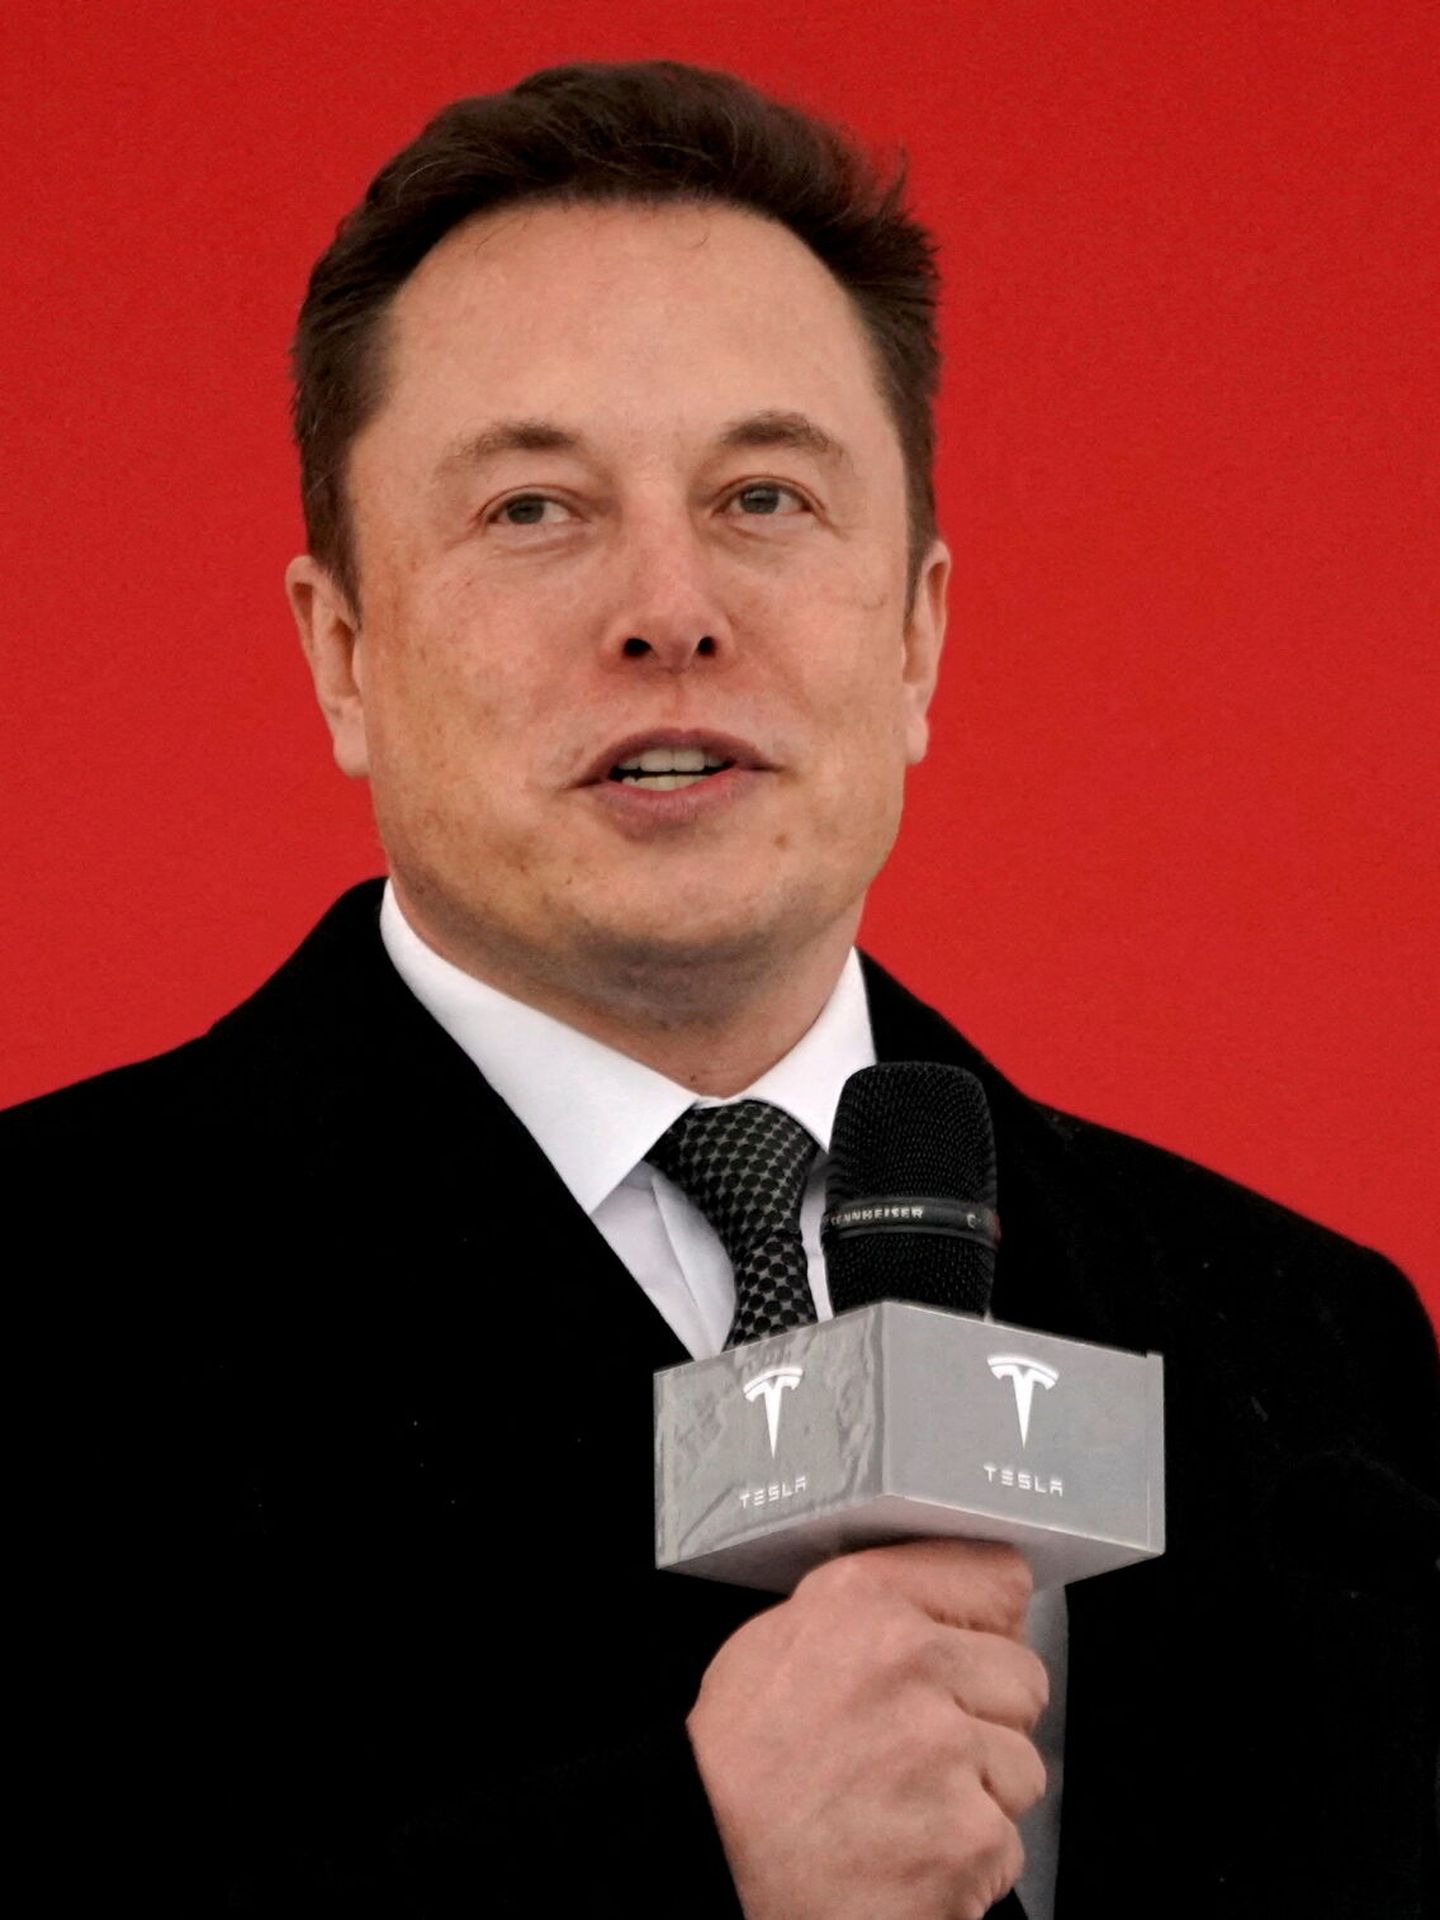 Elon Musk, en una imagen de archivo de 2019. (Reuters/Song)